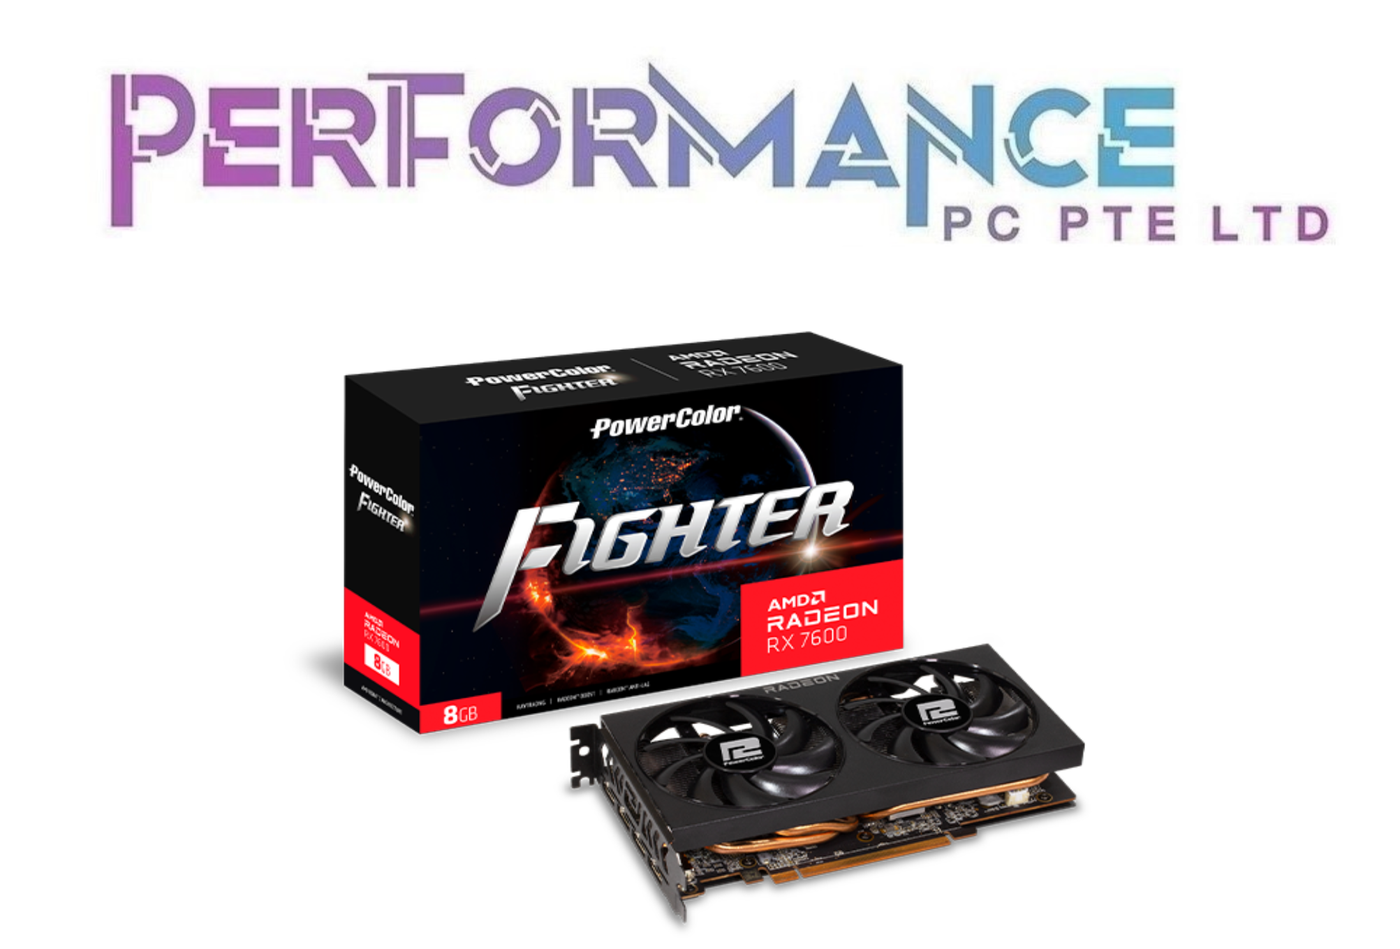 PowerColour Fighter AMD Radeon RX 7600 RX7600 8GB GDDR6 (3 YEARS WARRANTY BY BAN LEONG TECHNOLOGIES PTE LTD)